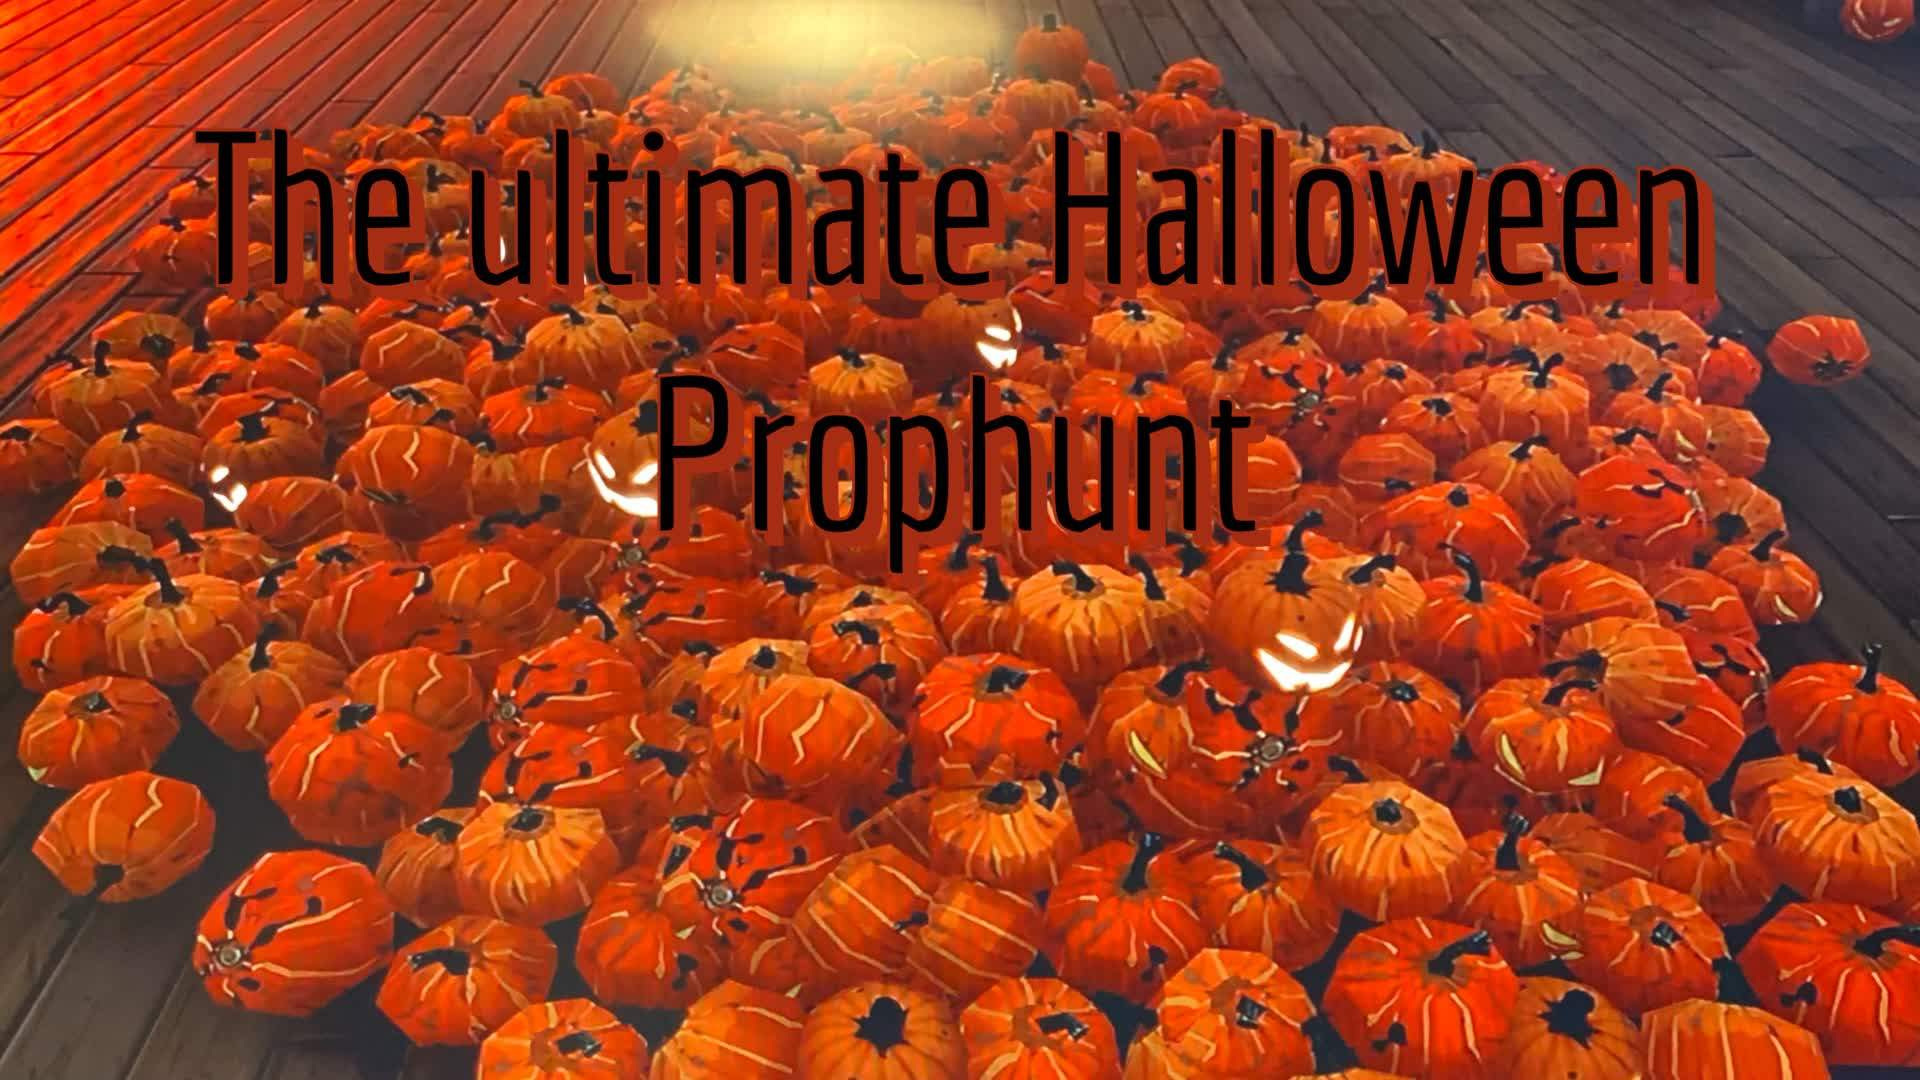 The ultimate Halloween Prophunt